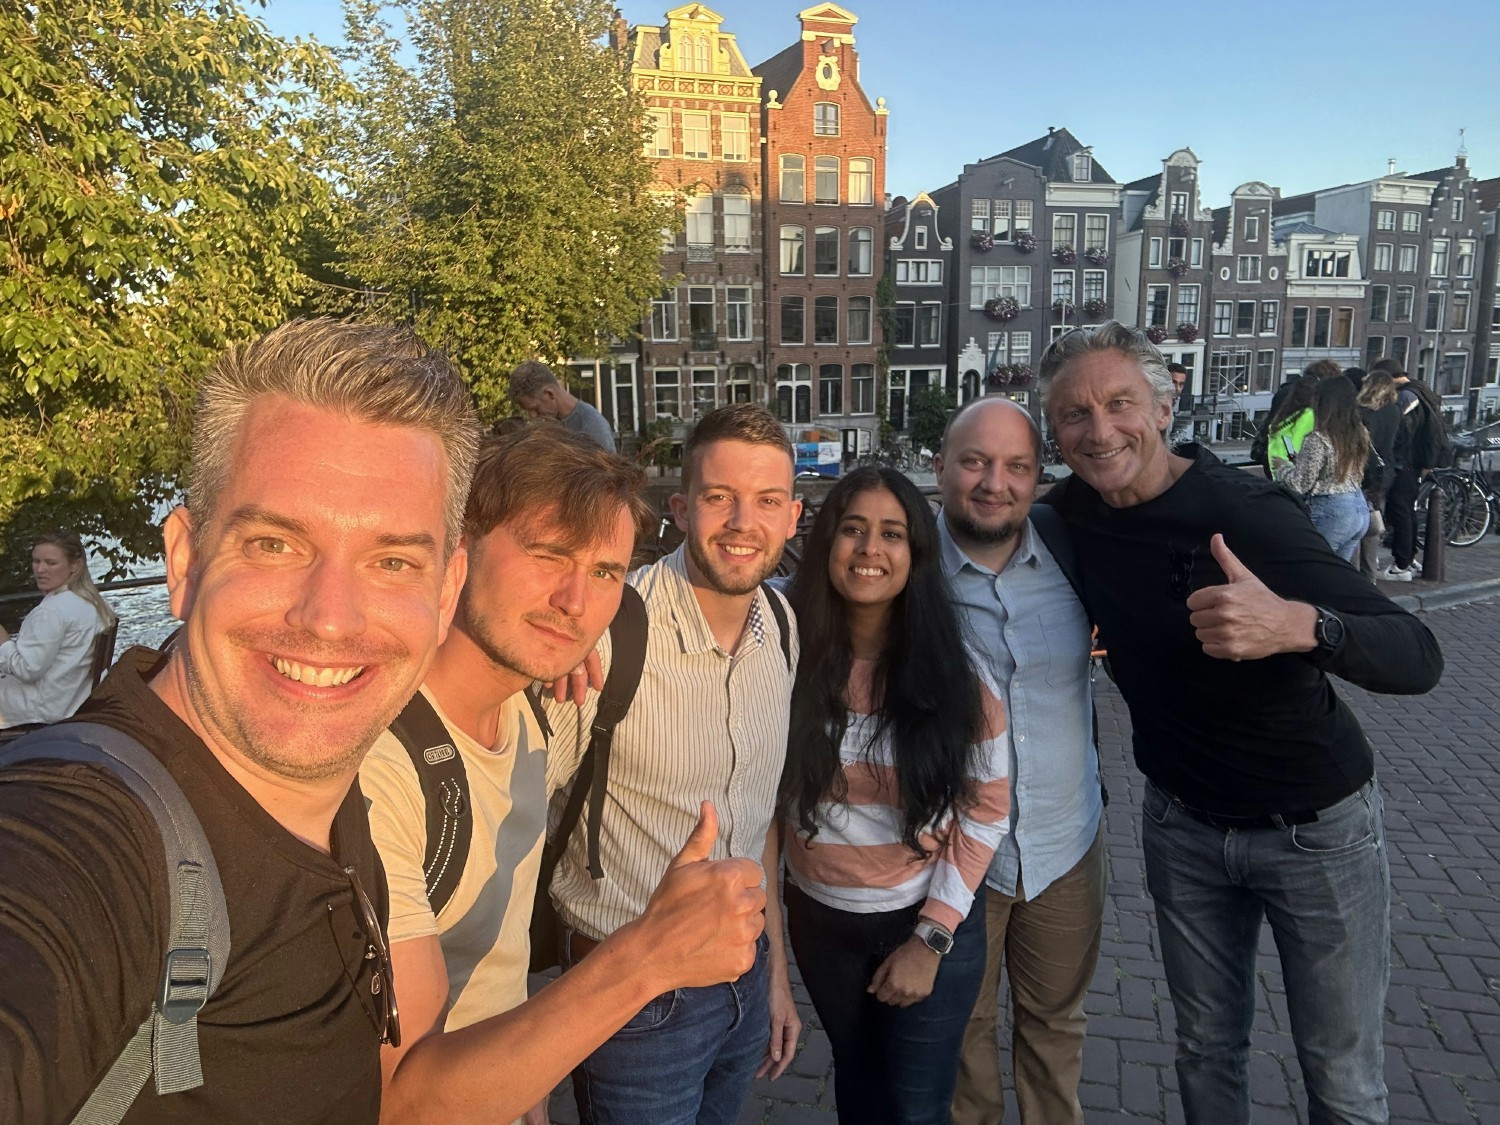 Our Dutch team having bonding time around town. 